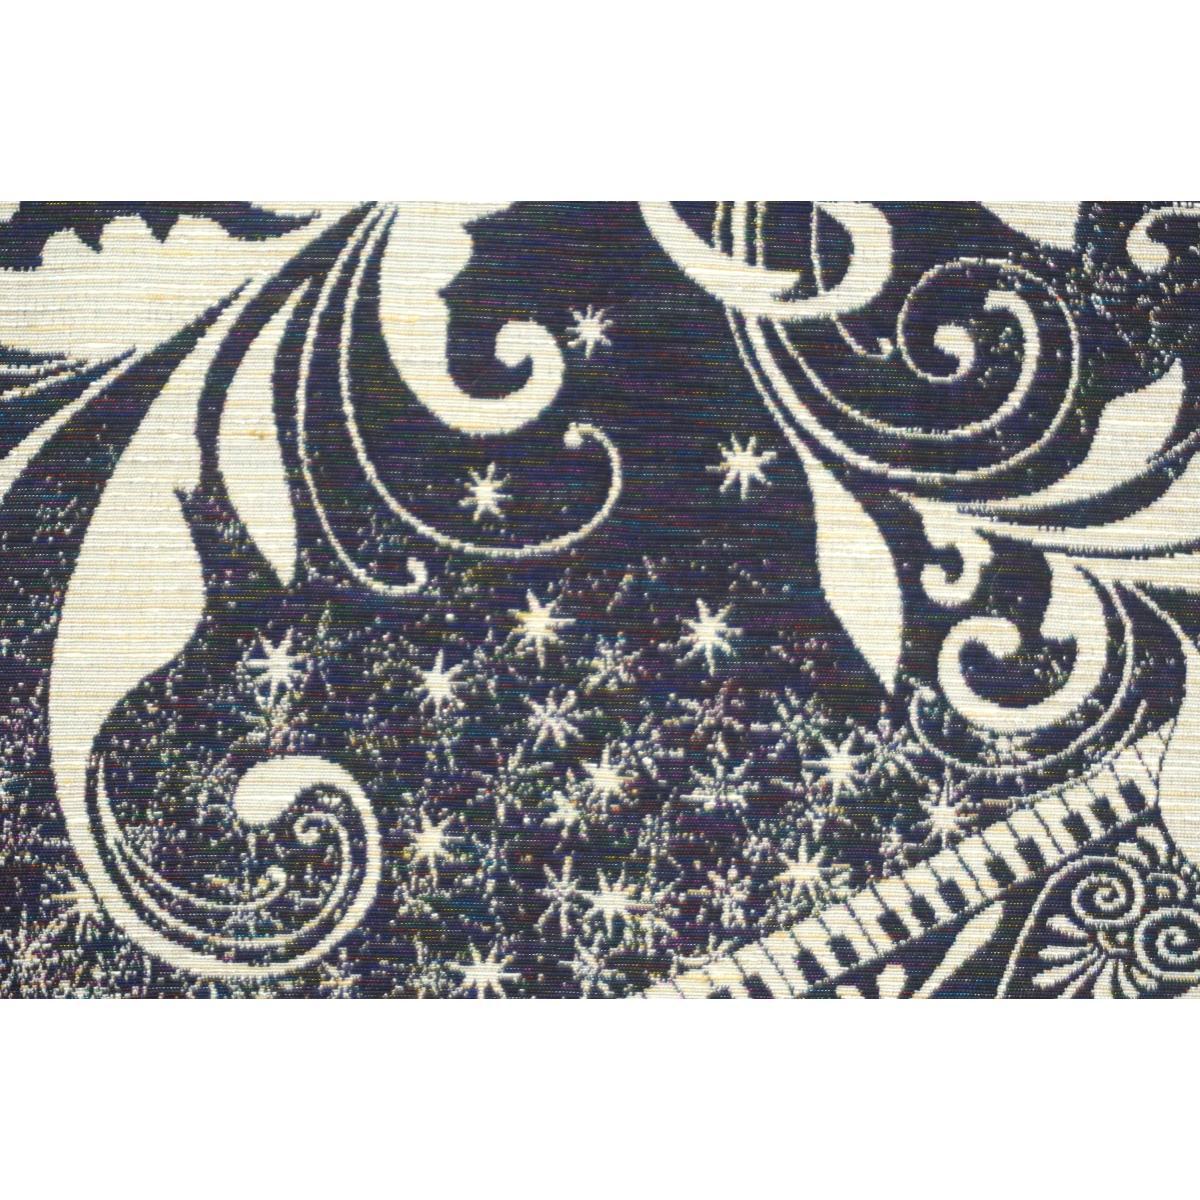 Fukuro obi Tomiya textile Zento pattern